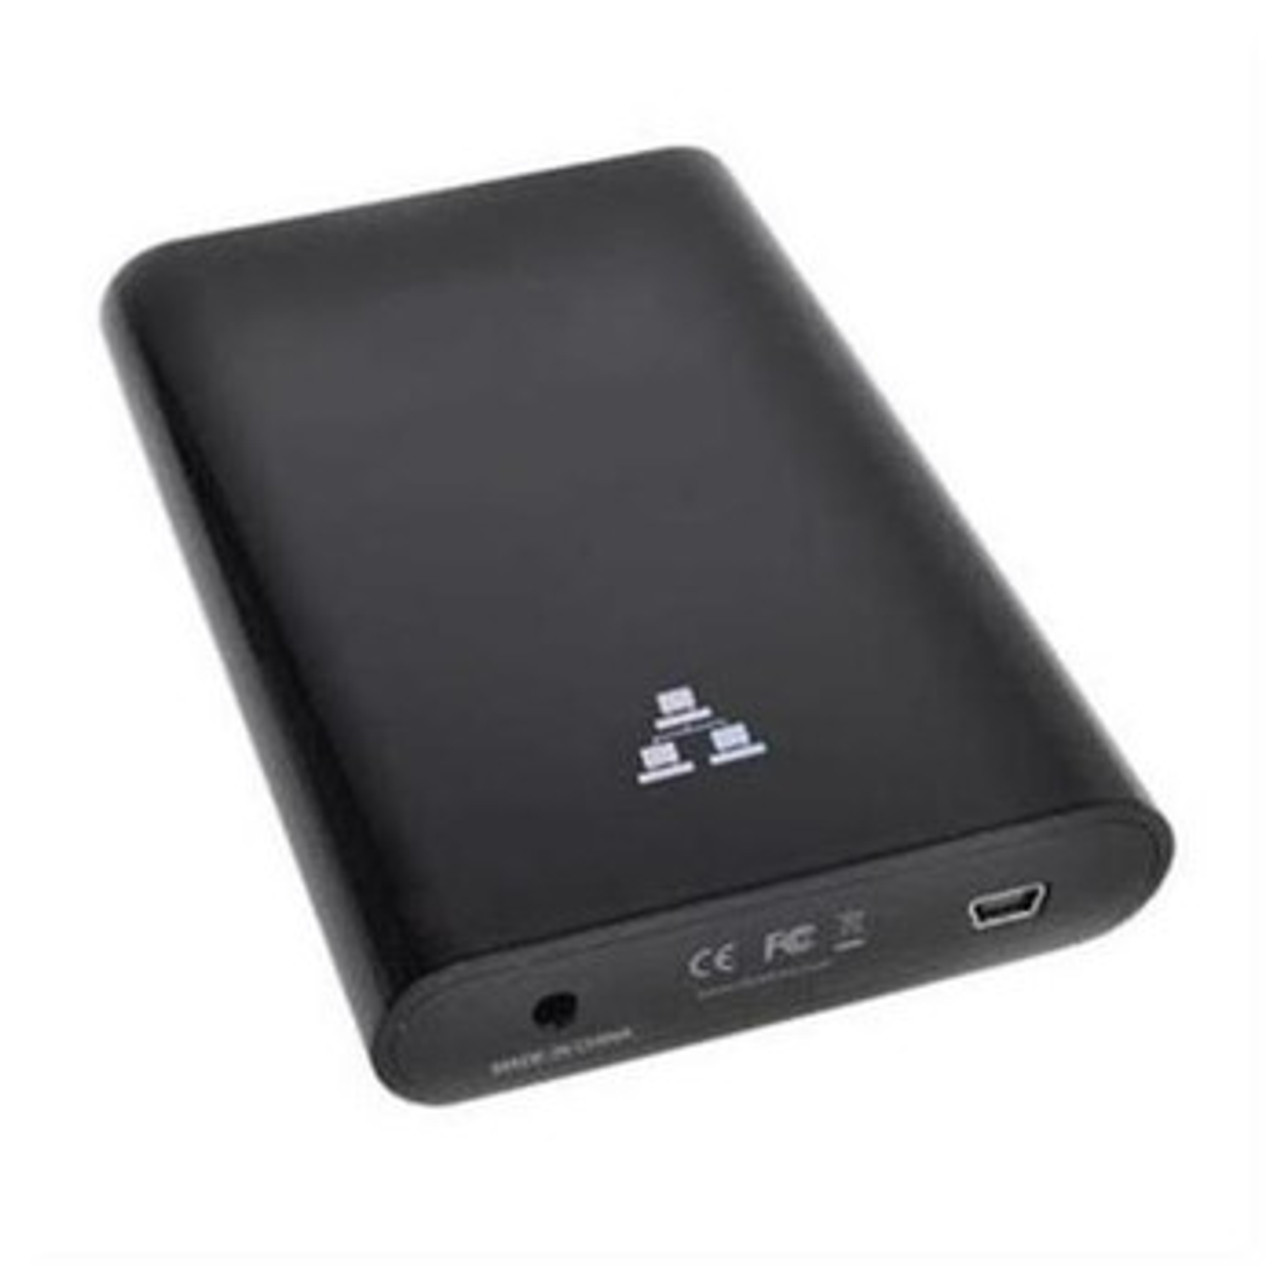 STDR5000101 | Seagate | Backup Plus 5TB External Hard Drive Portable Silver